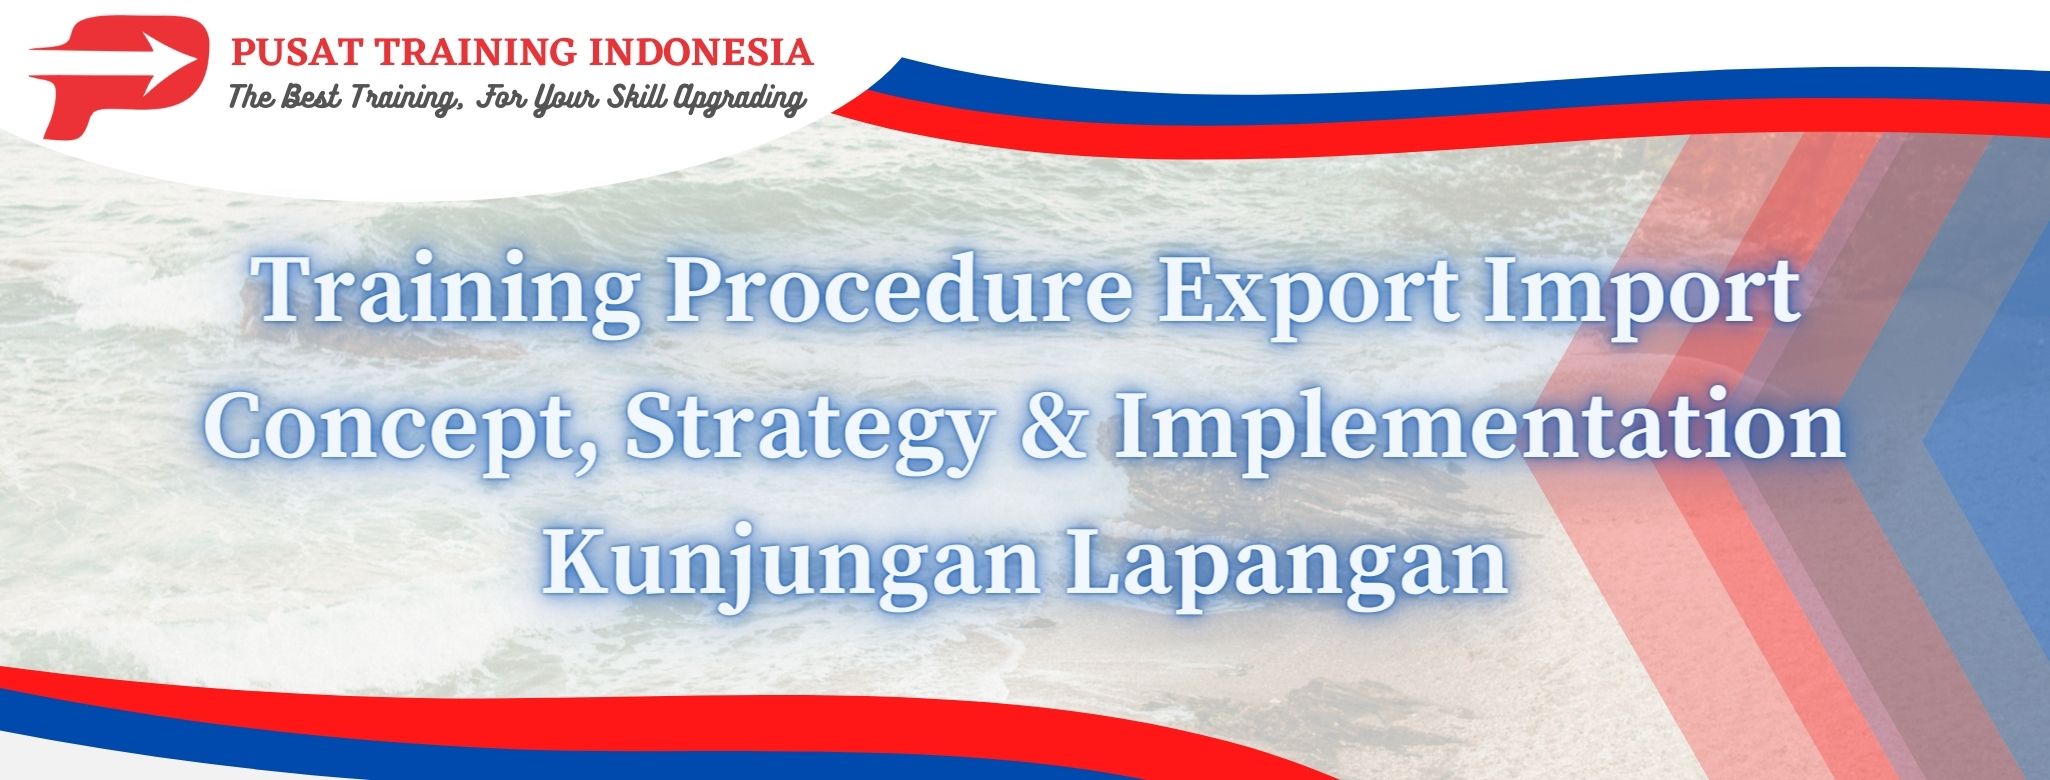 Training-Procedure-Export-Import-Concept-Strategy-Implementation-Kunjungan-Lapangan